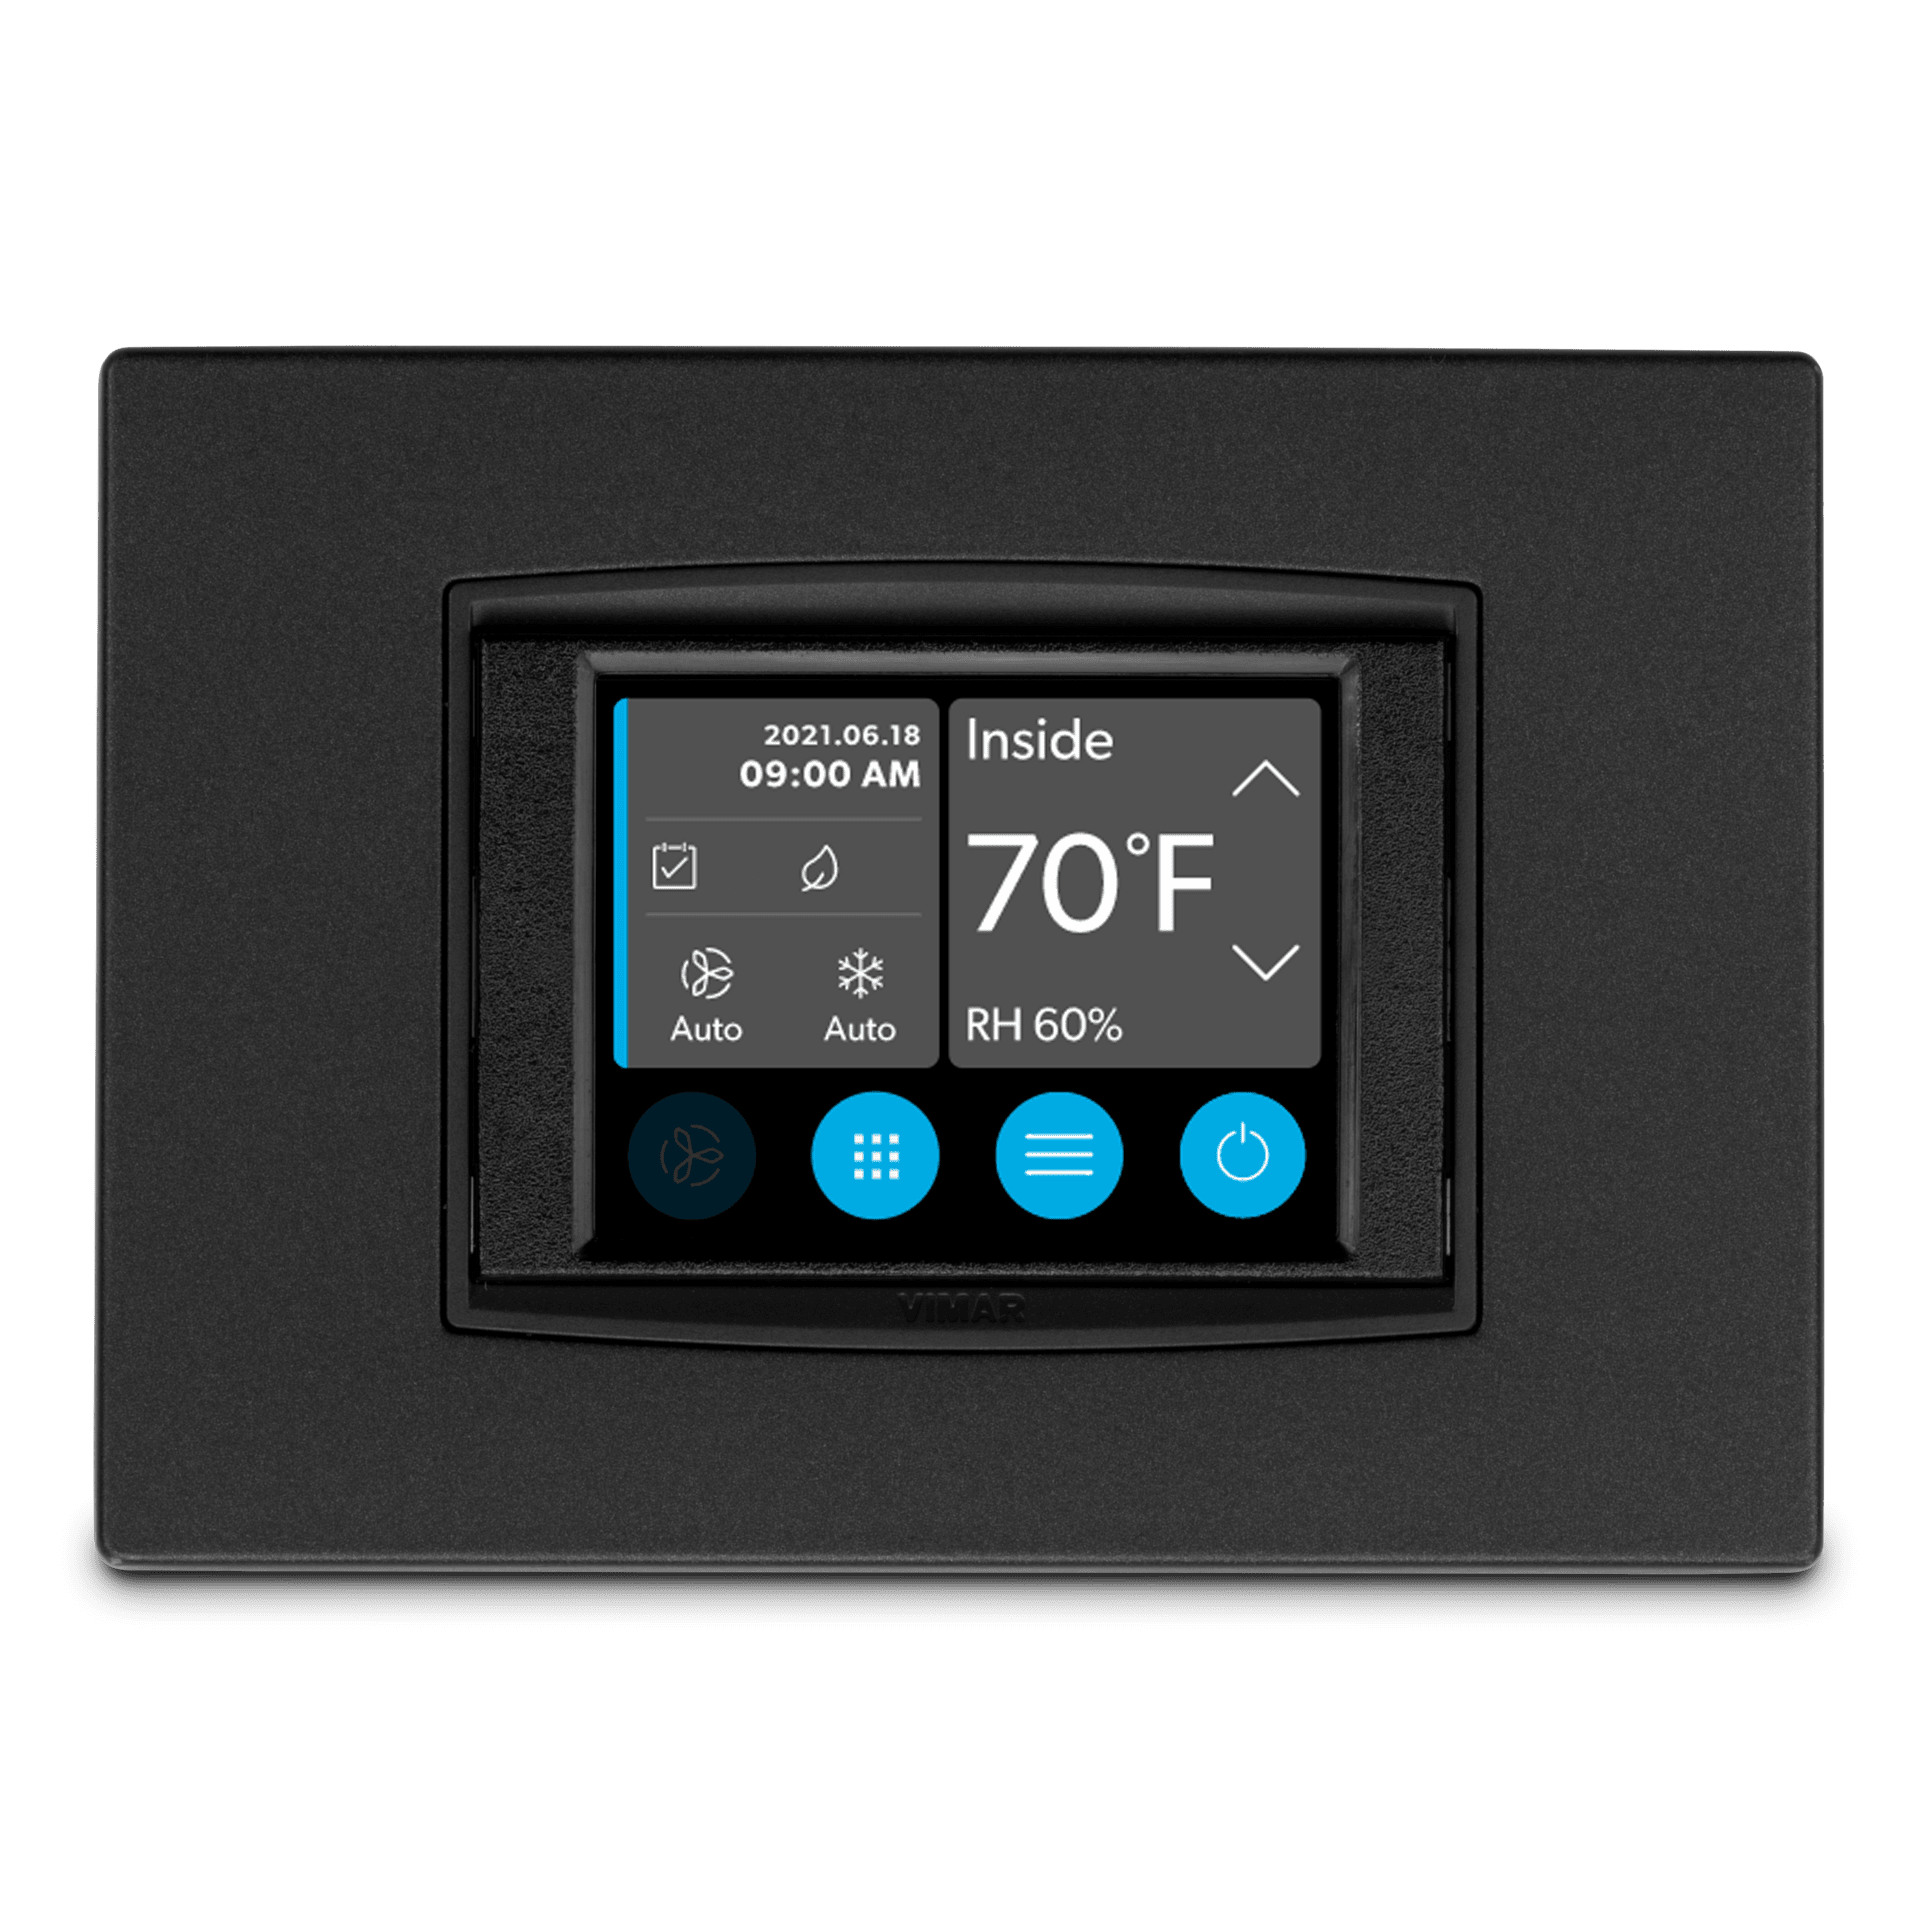 Dometic Comfort Control Center - Multi-Zone CCC Thermostat in